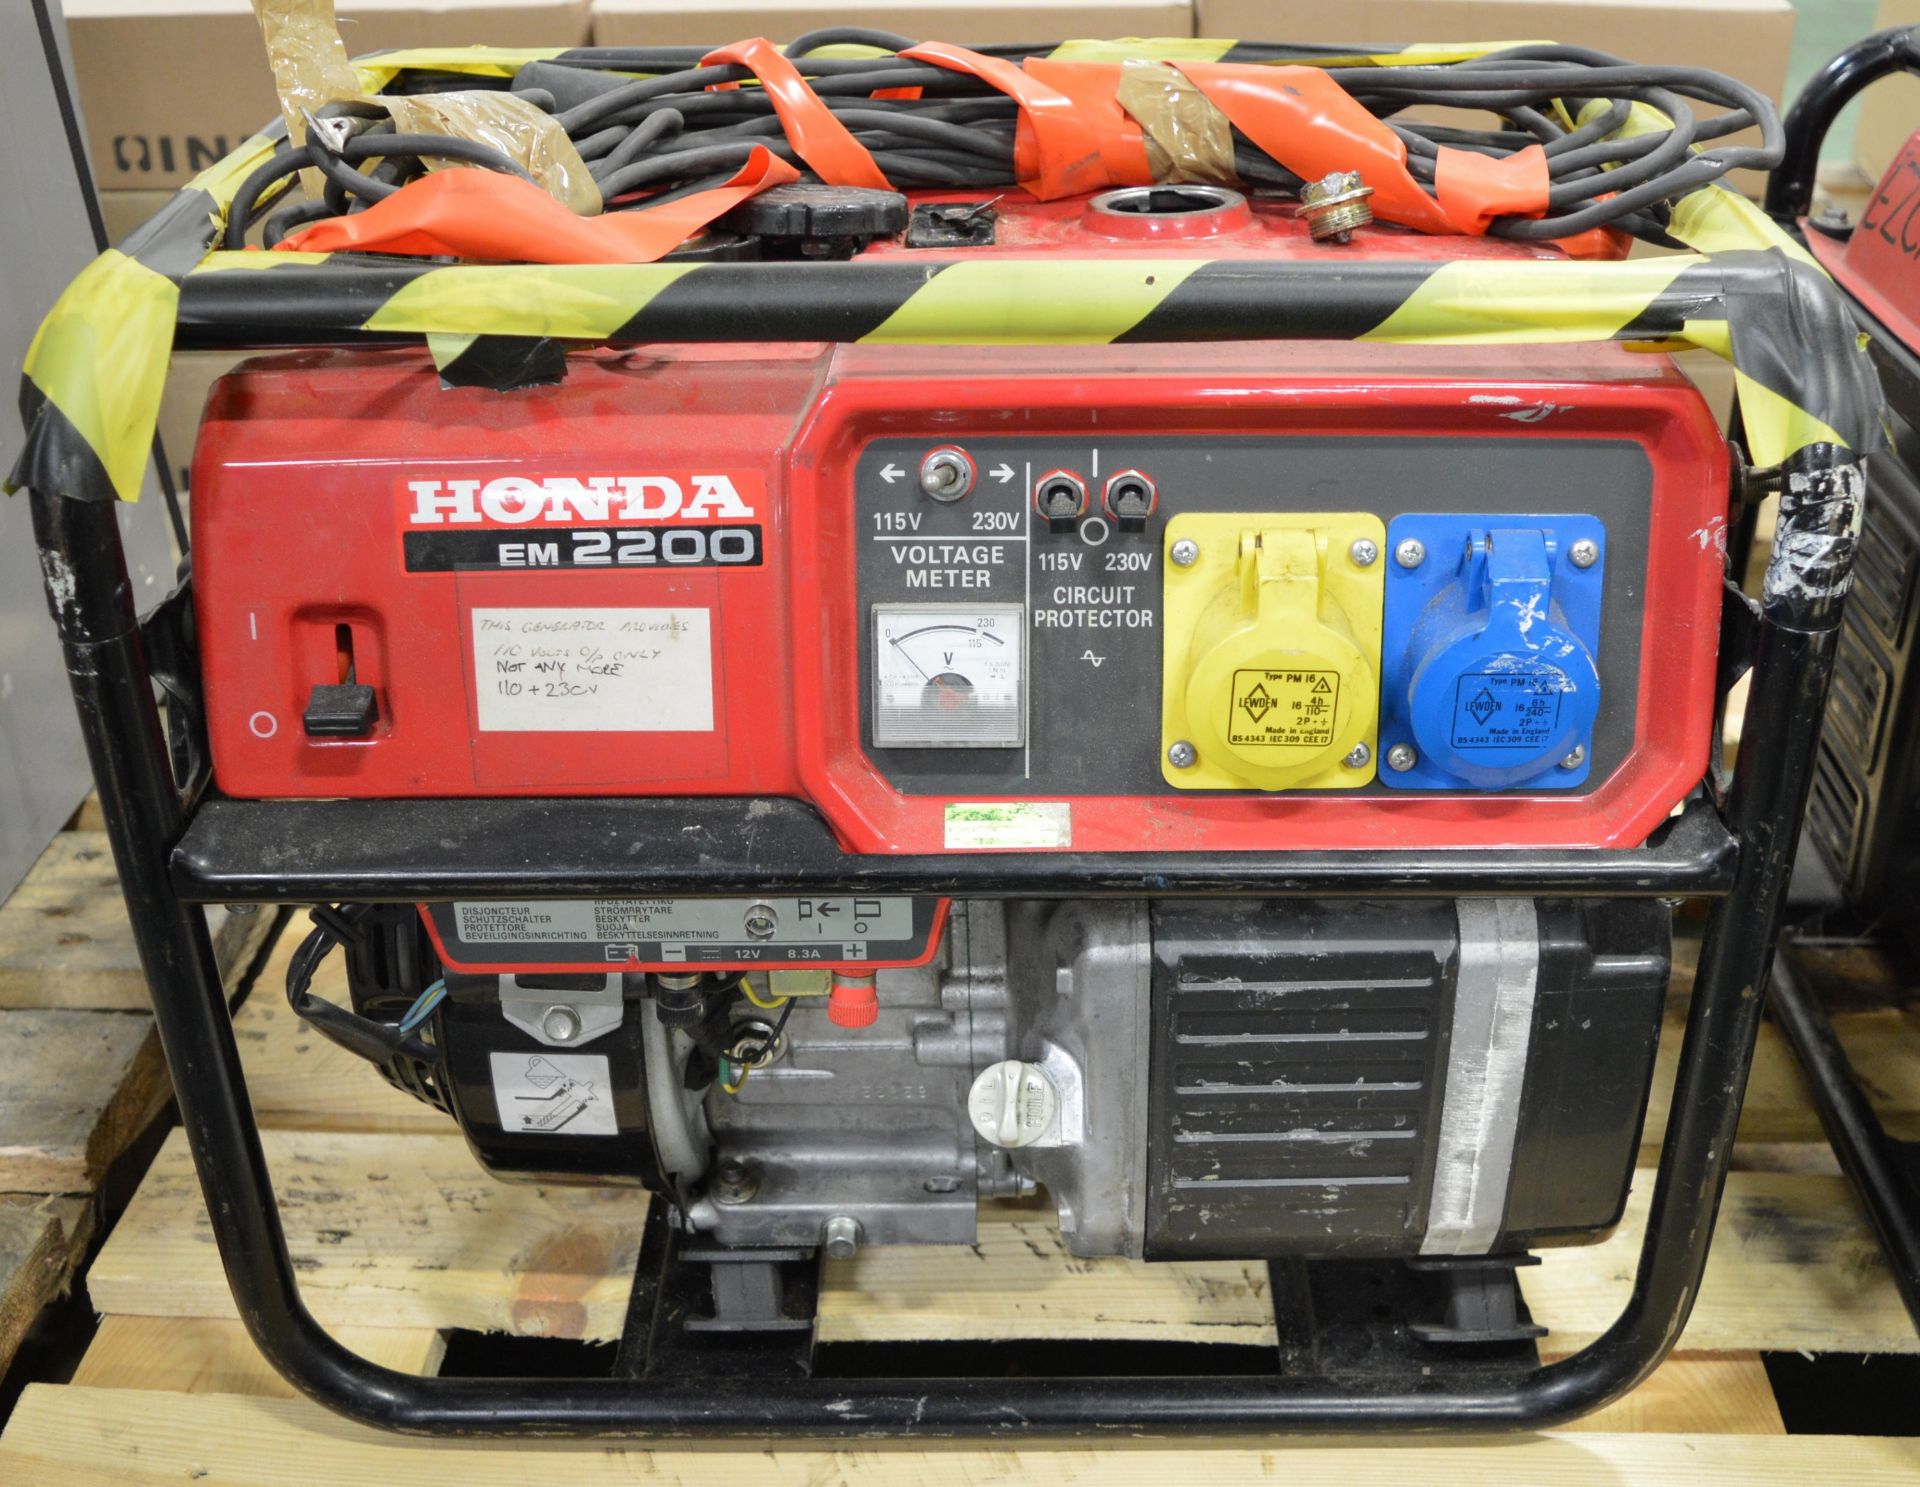 Honda EM 2200 Portable Generator 2kW 110V / 230V.